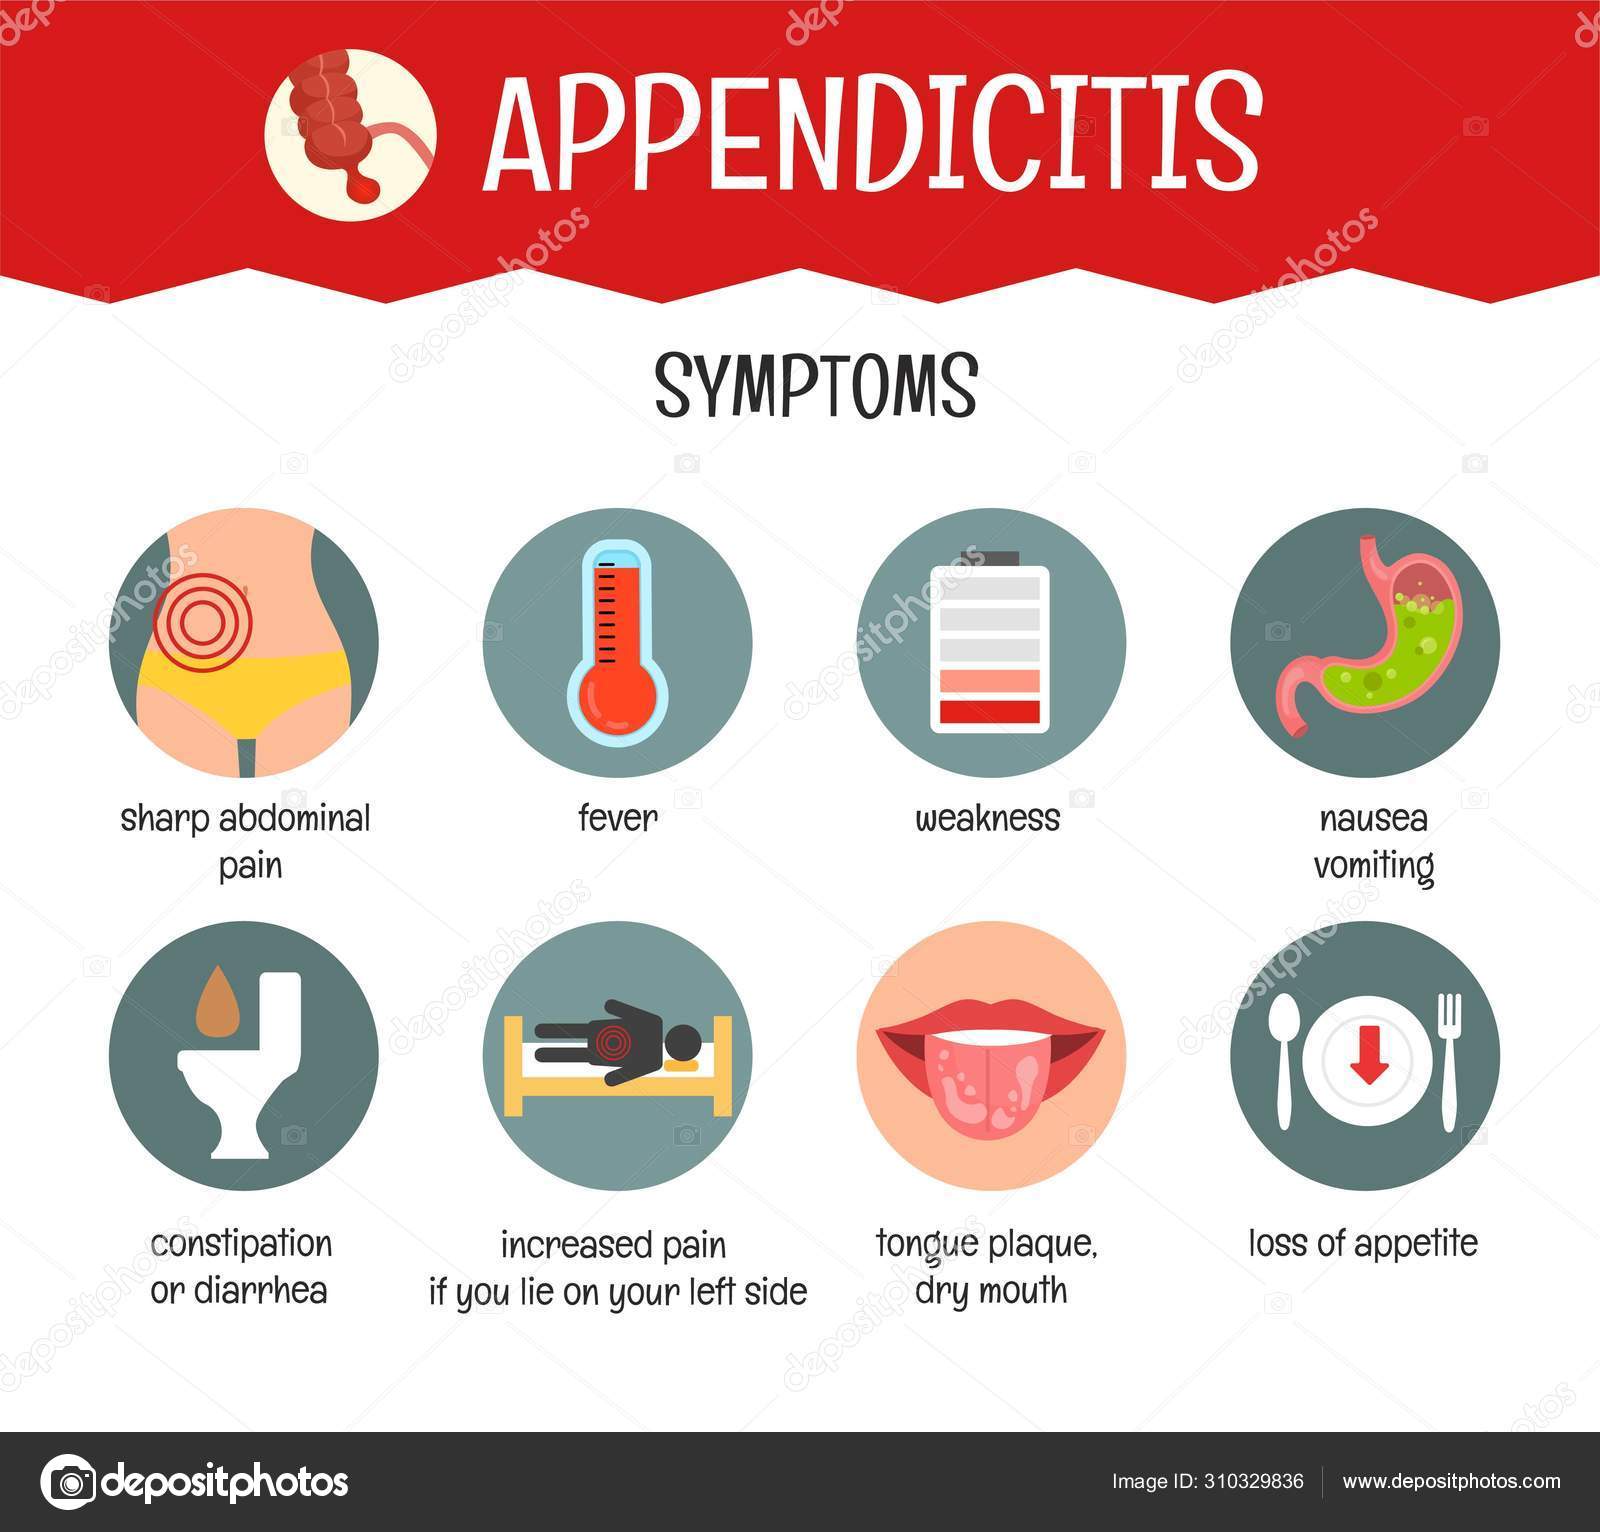 Appendicitis symptoms